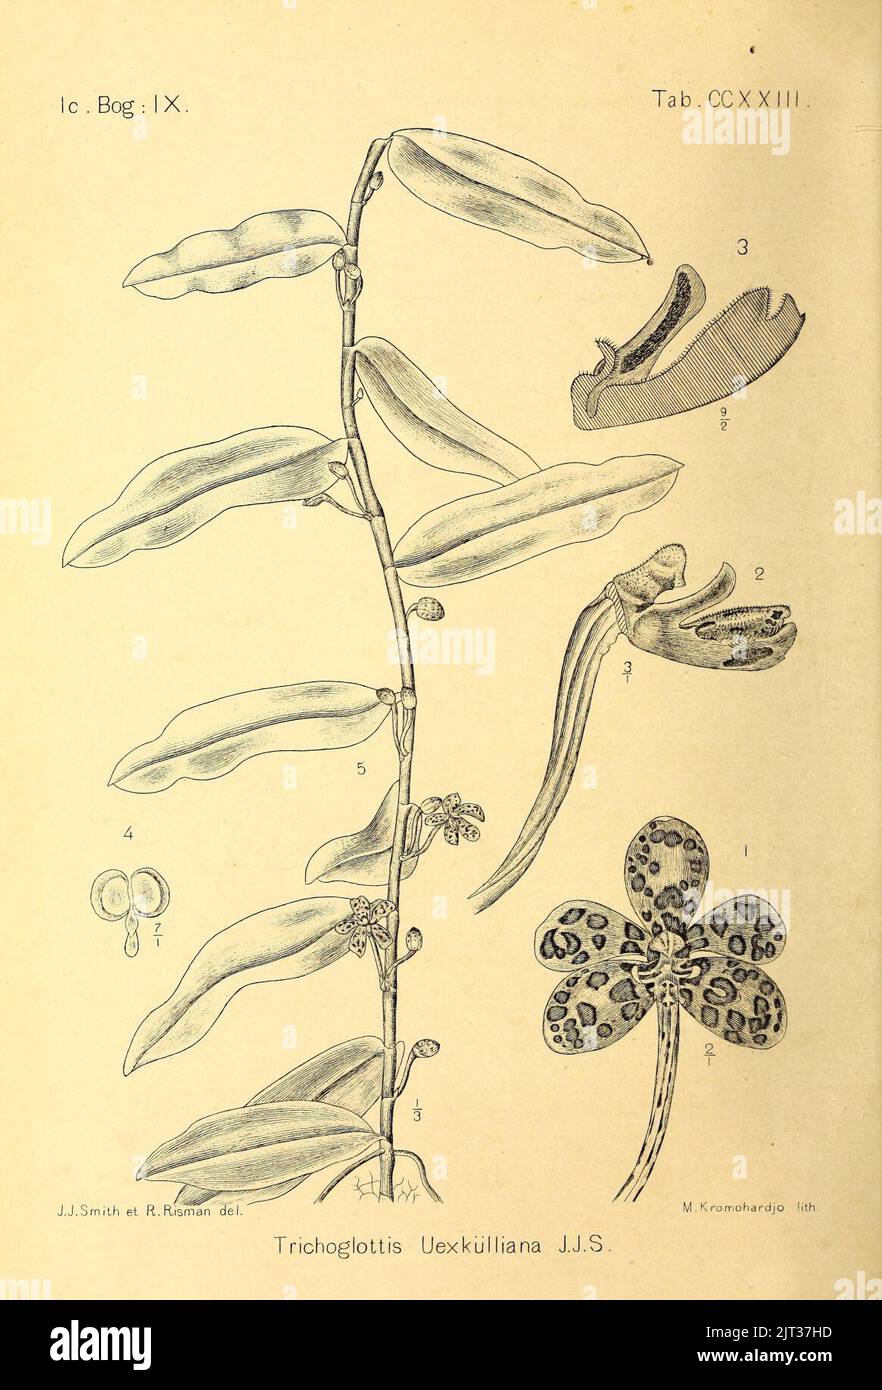 Trichoglottis uexkuelliana Icones Bogorienses V3 Tab CCXXIII (1906). Stock Photo